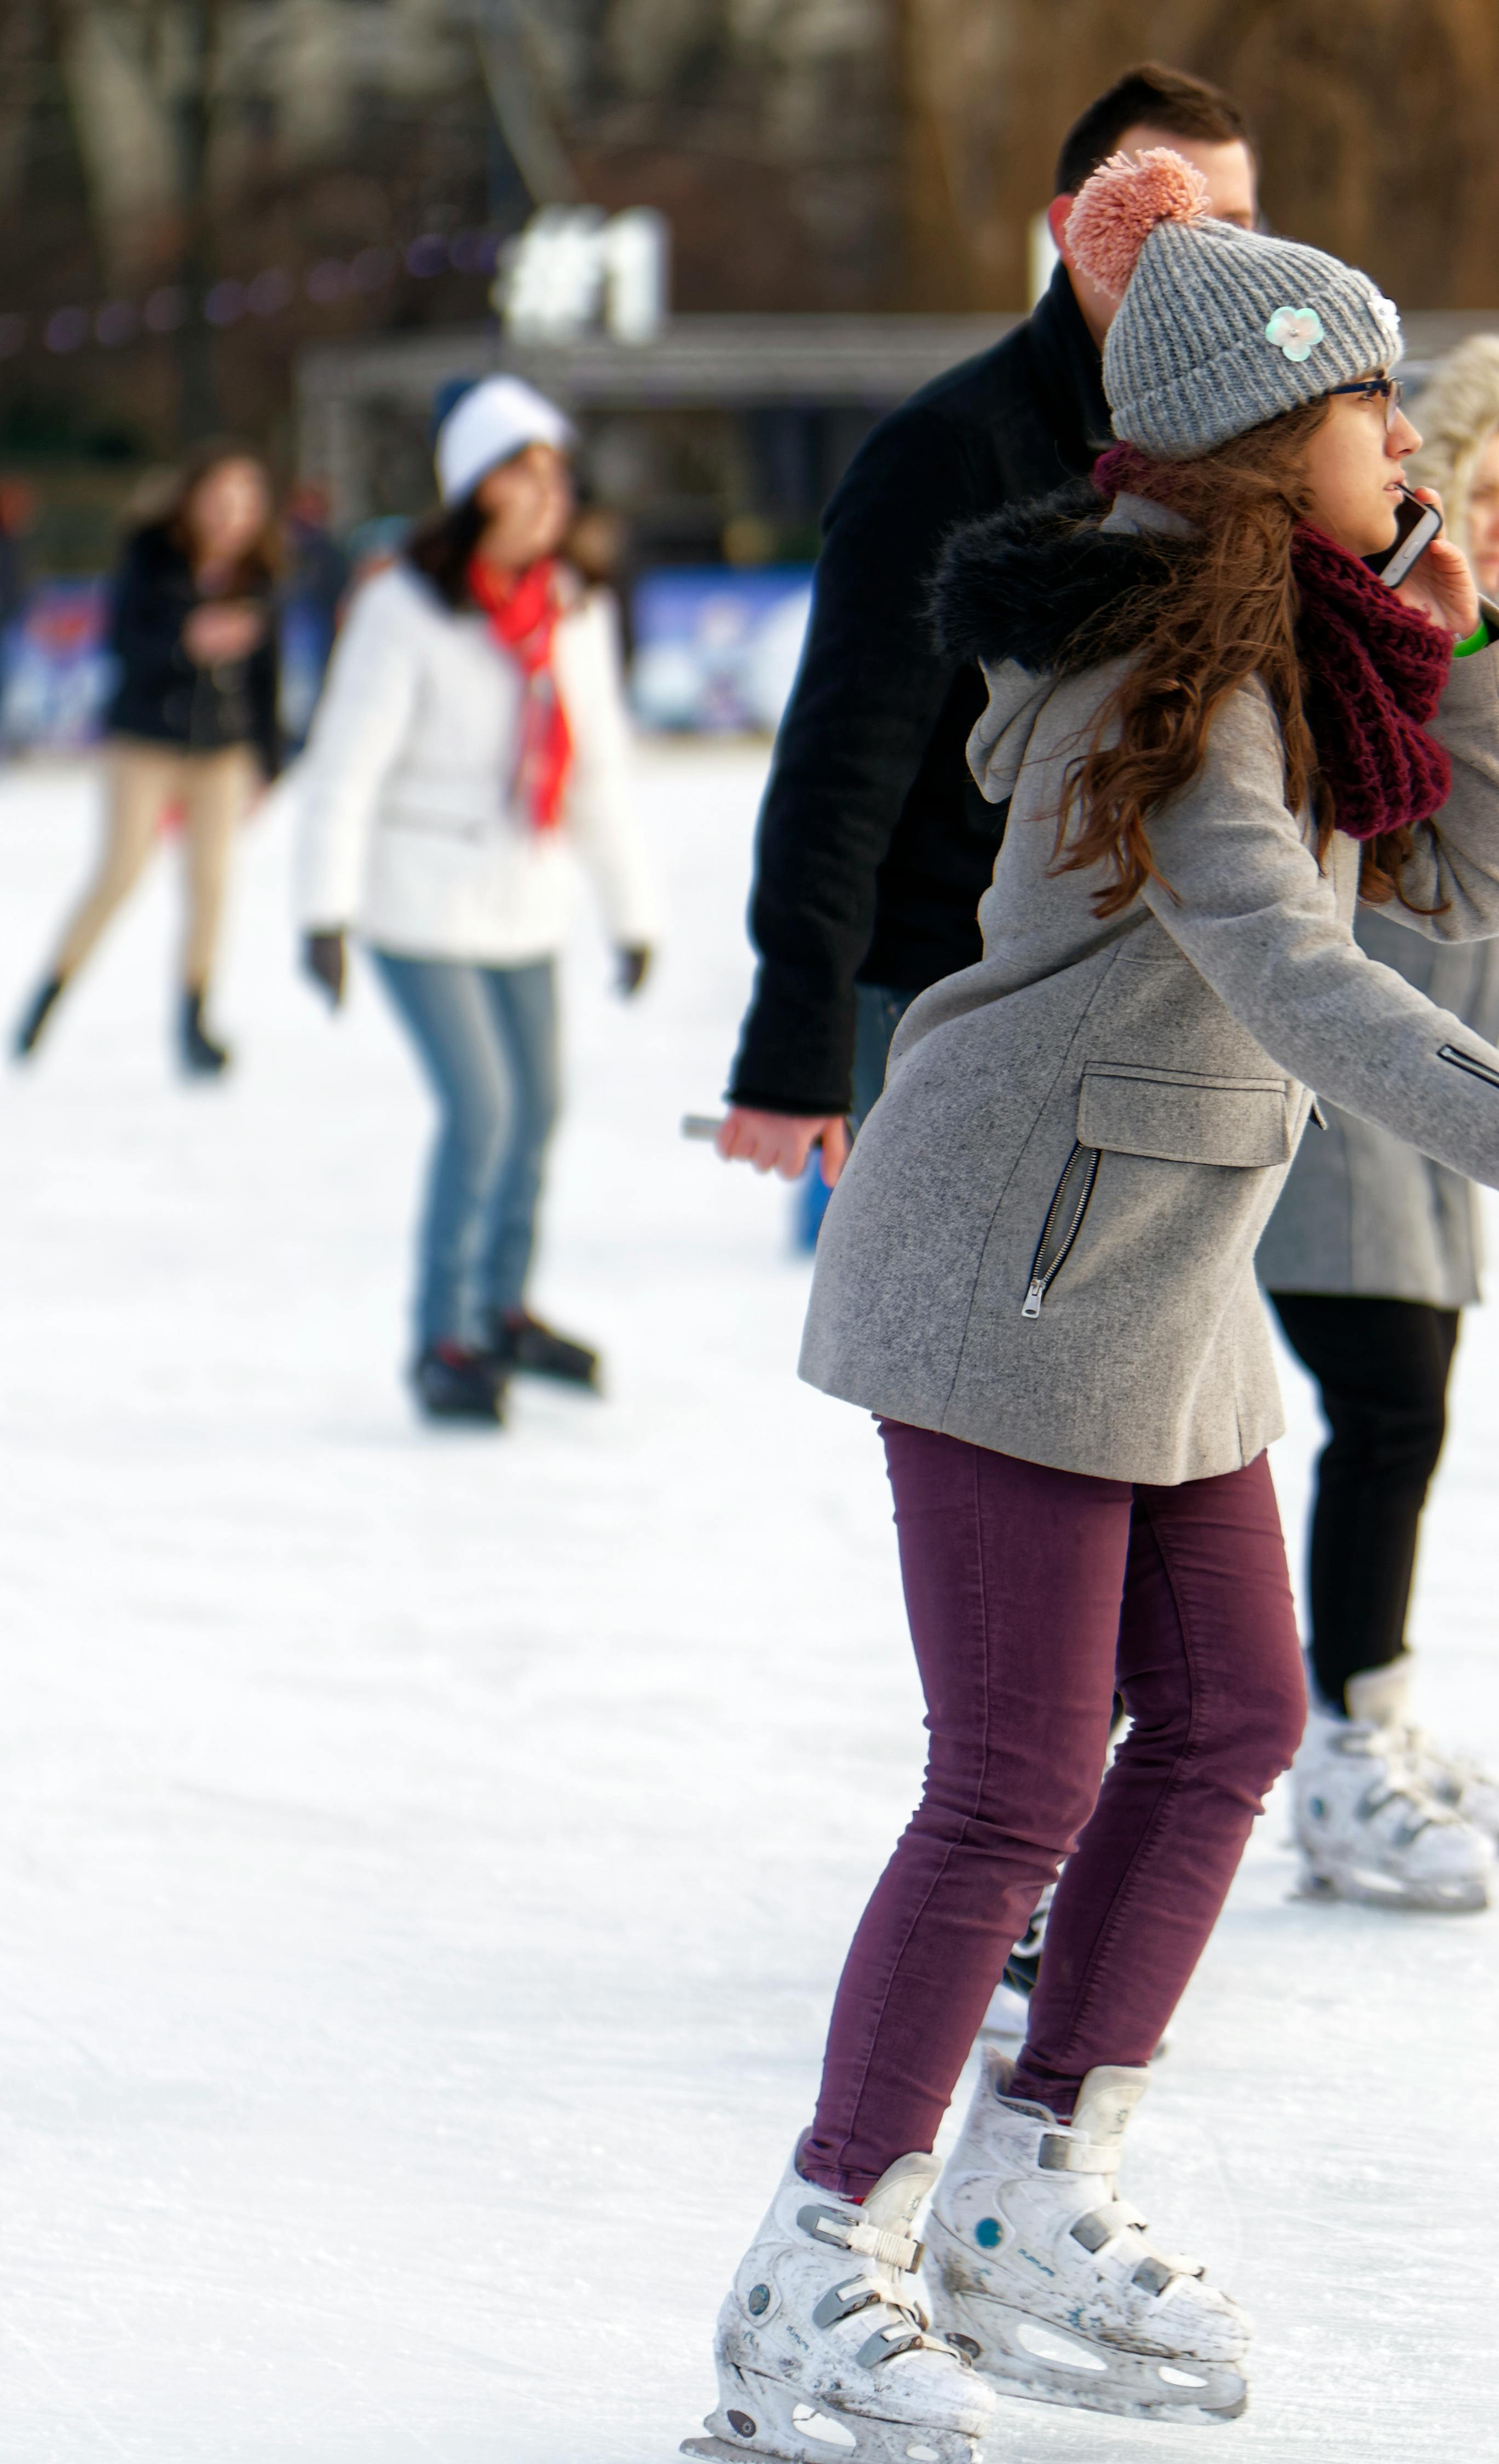 Free stock photo of ice skating rink, people skating, winter